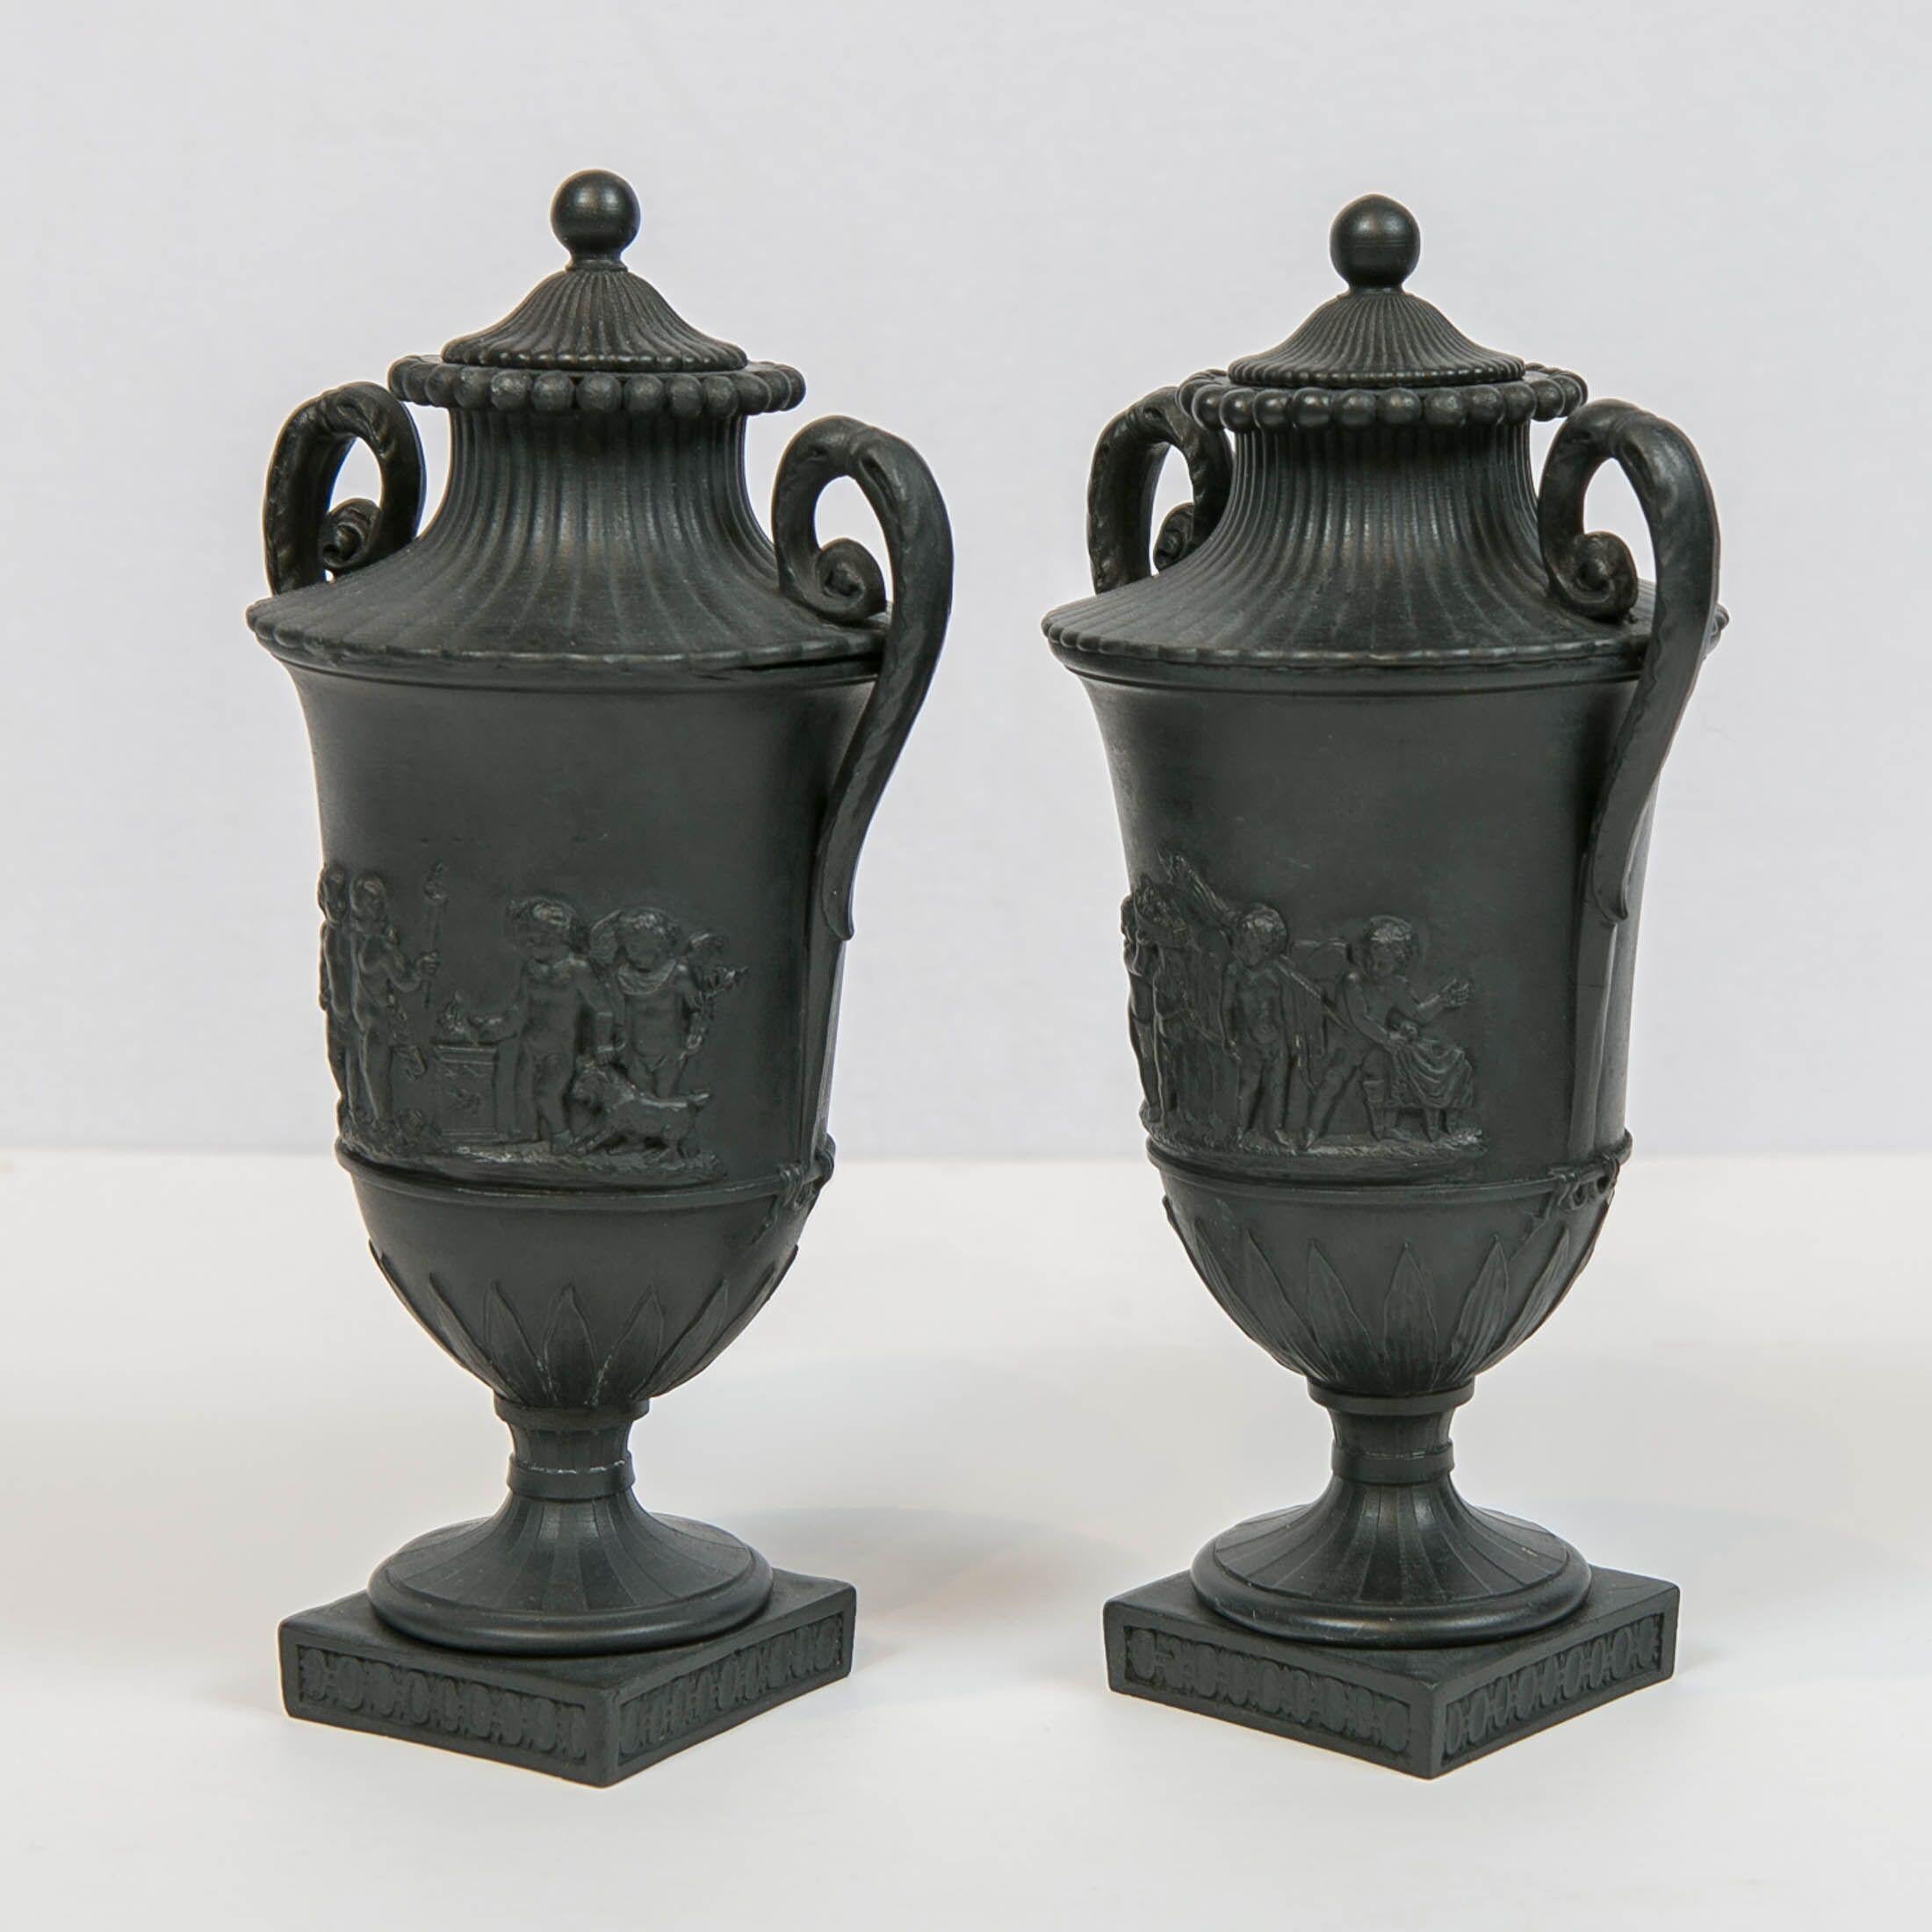 19th Century Pair of Small Wedgwood Black Basalt Vases Made circa 1800